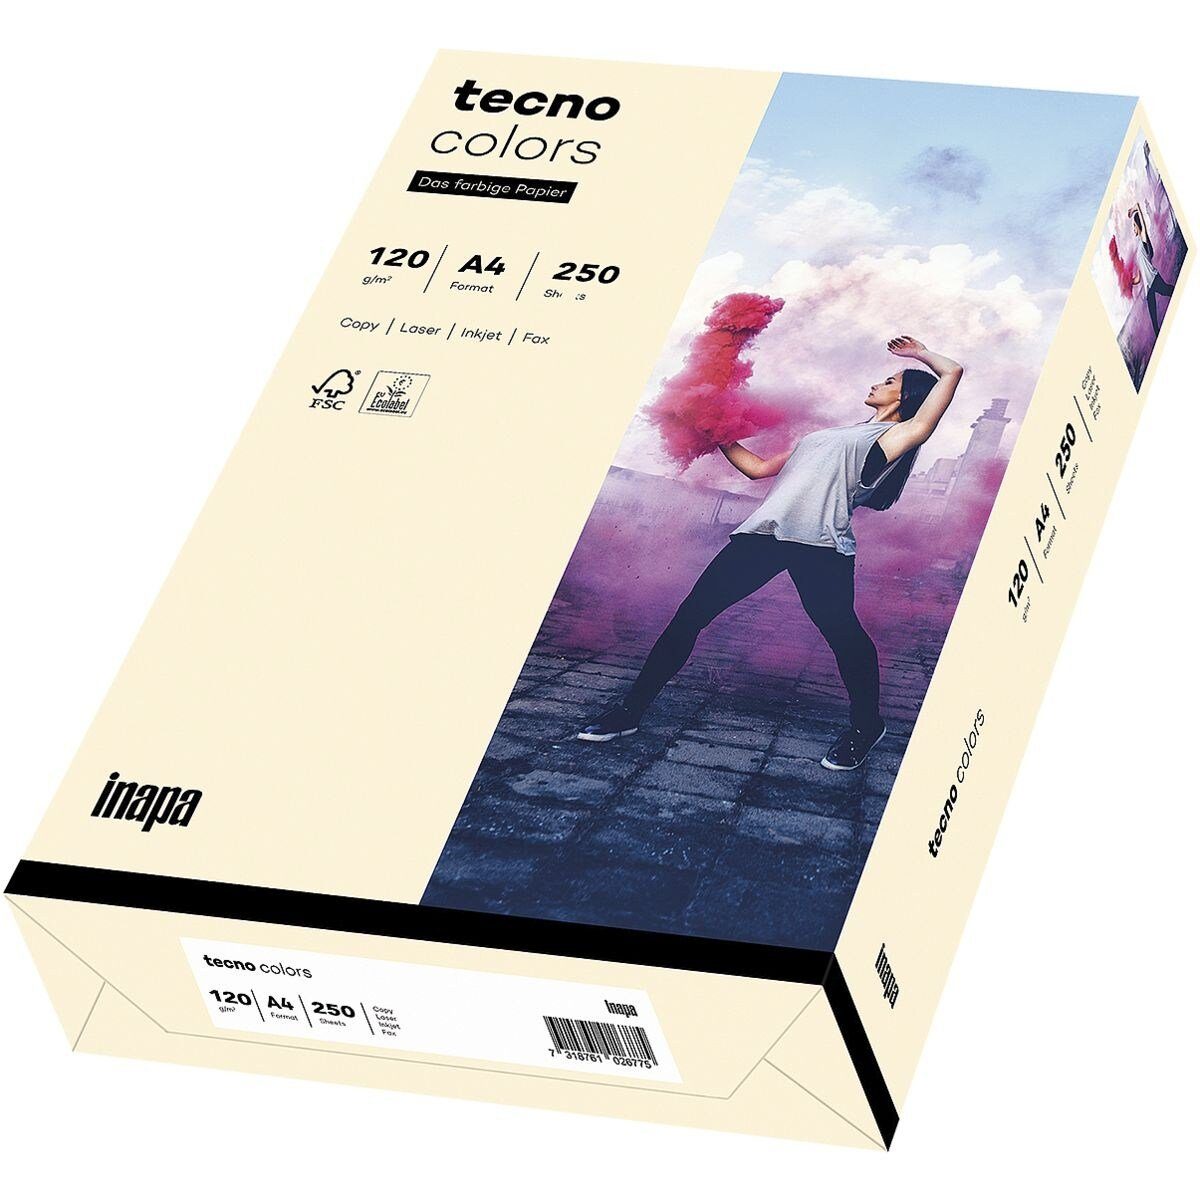 Inapa tecno Drucker- und Kopierpapier Rainbow / tecno Colors, Pastellfarben, Format DIN A4, 120 g/m², 250 Blatt hellchamois